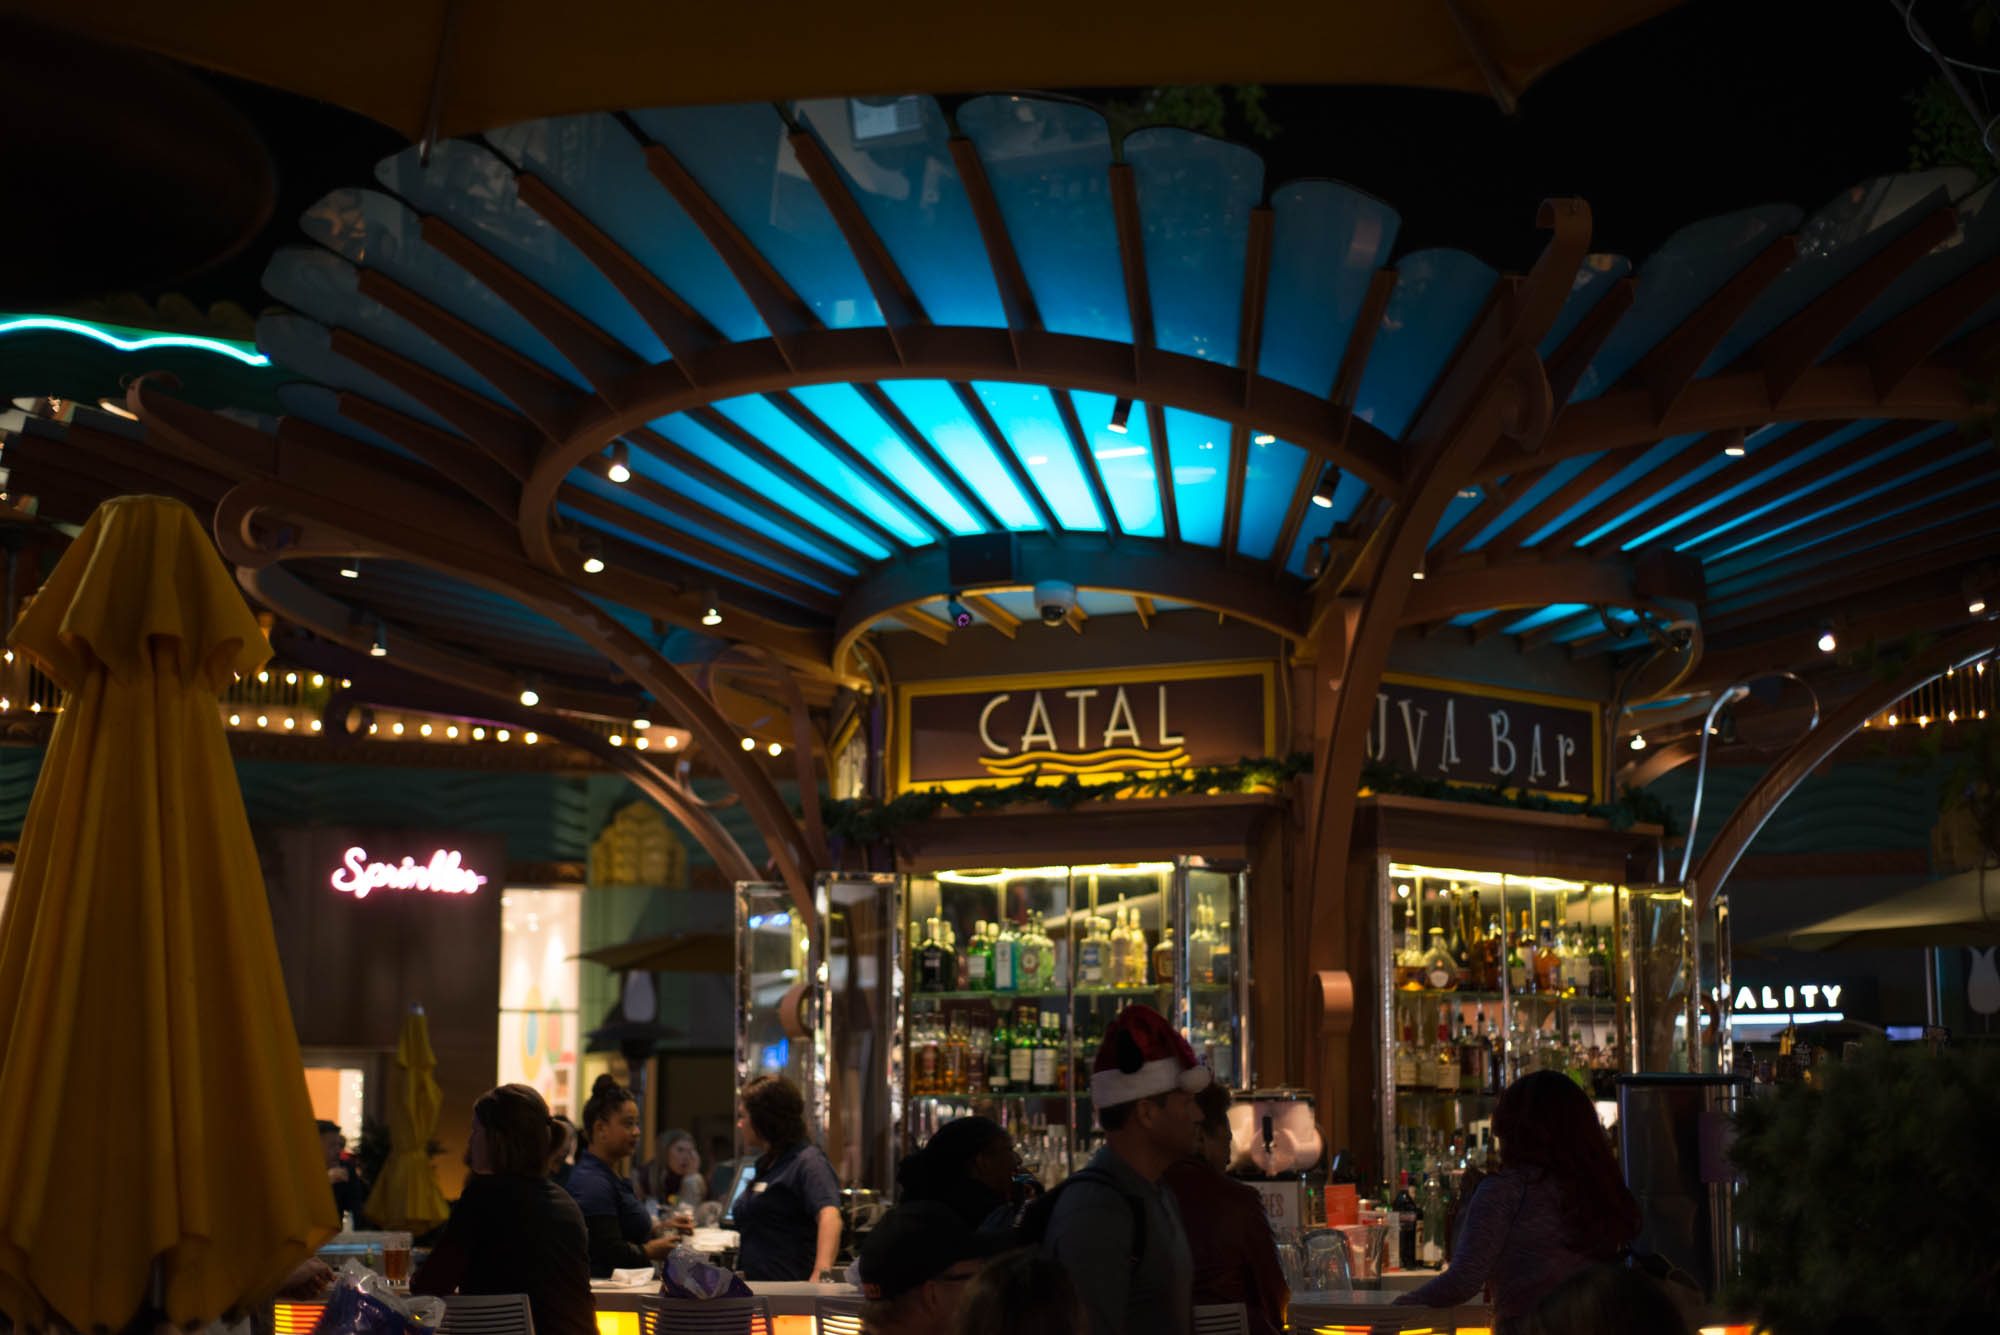 Bustling Uva Bar at Catal Restaurant in Downtown Disney - Nightlife at Disneyland